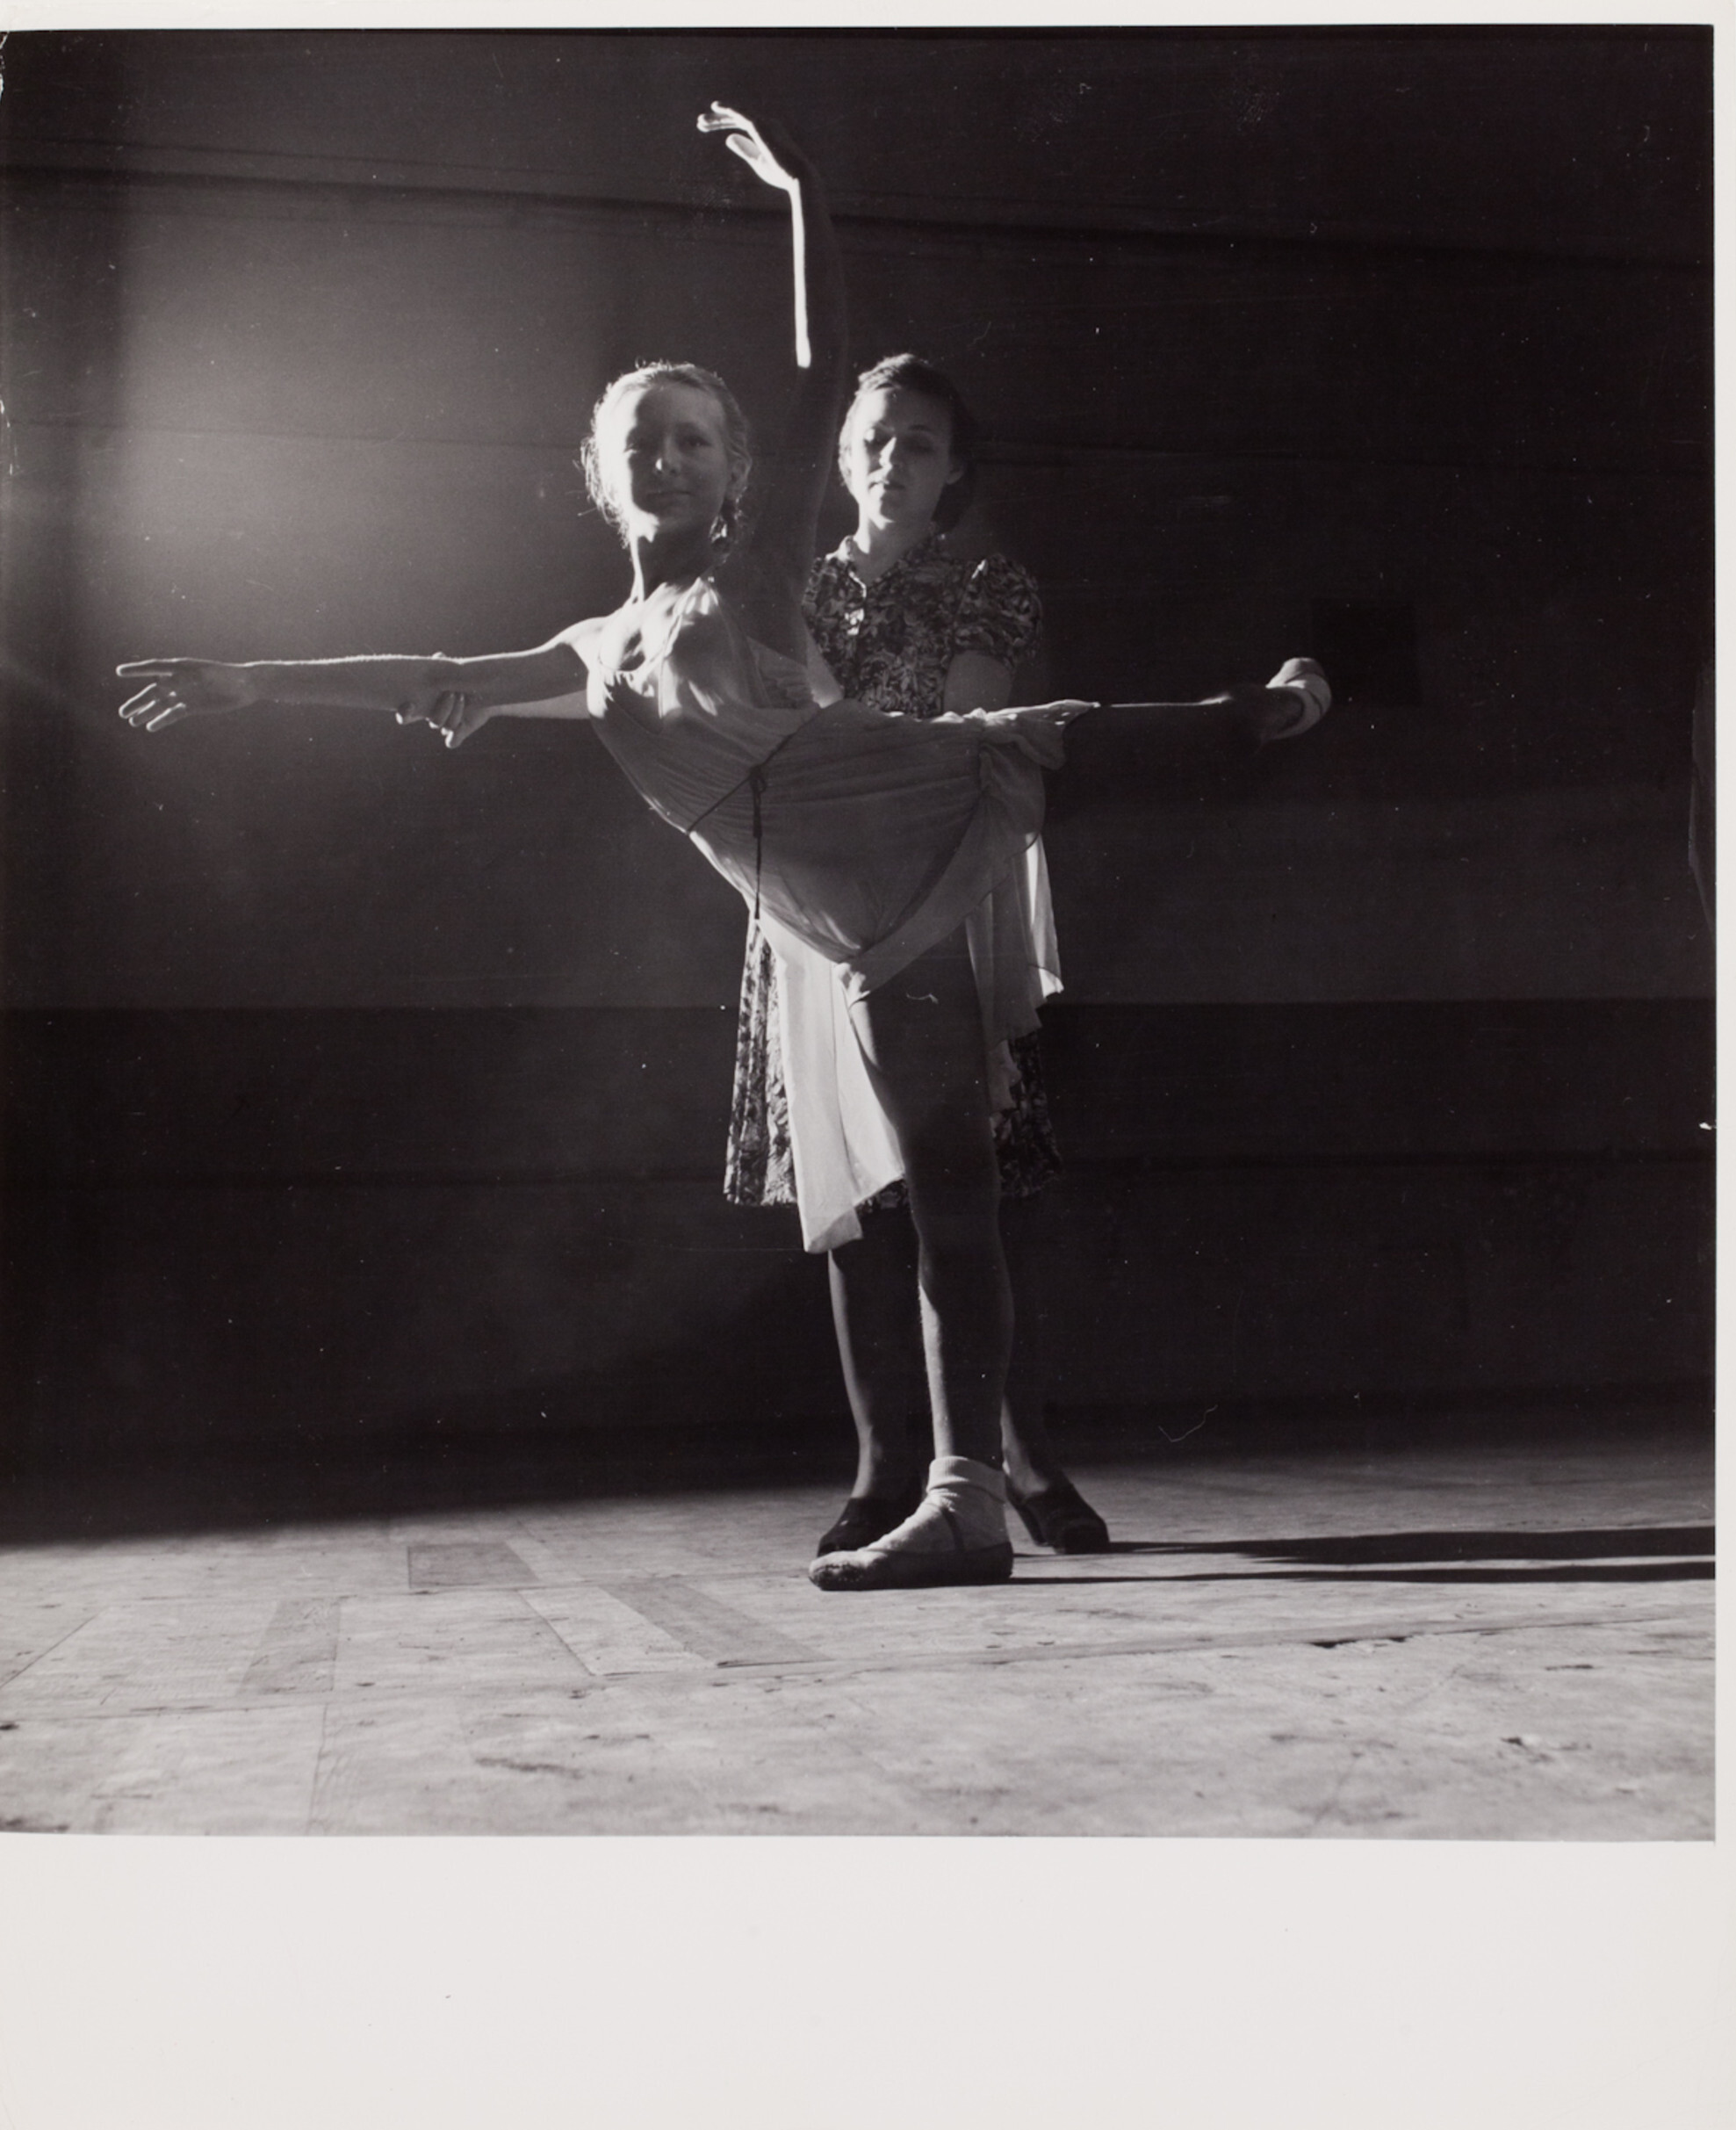 Девушка занимается балетом с учителем, Москва, 1947 год. Фотограф Роберт Капа